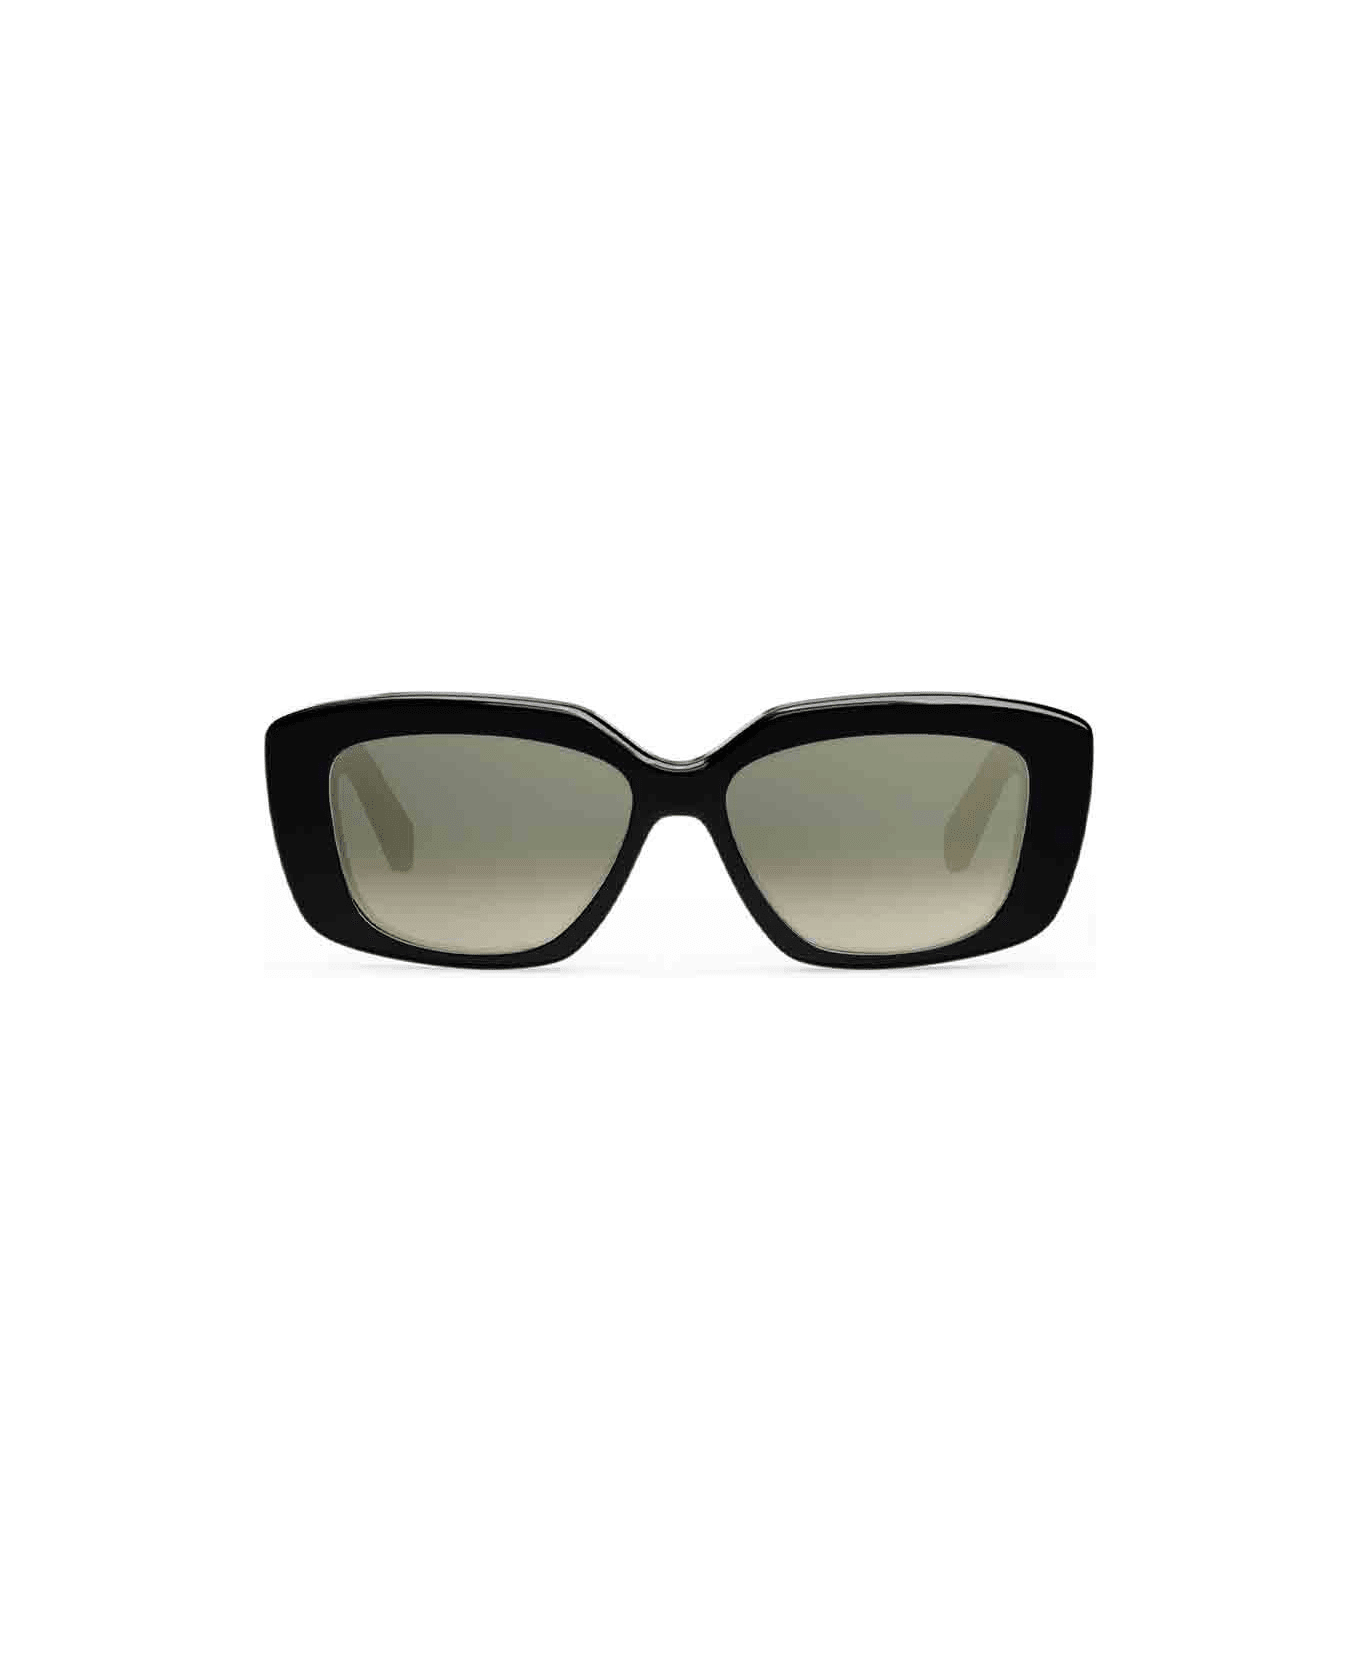 Celine Cat-eye Squared Sunglasses - Nero/Verde